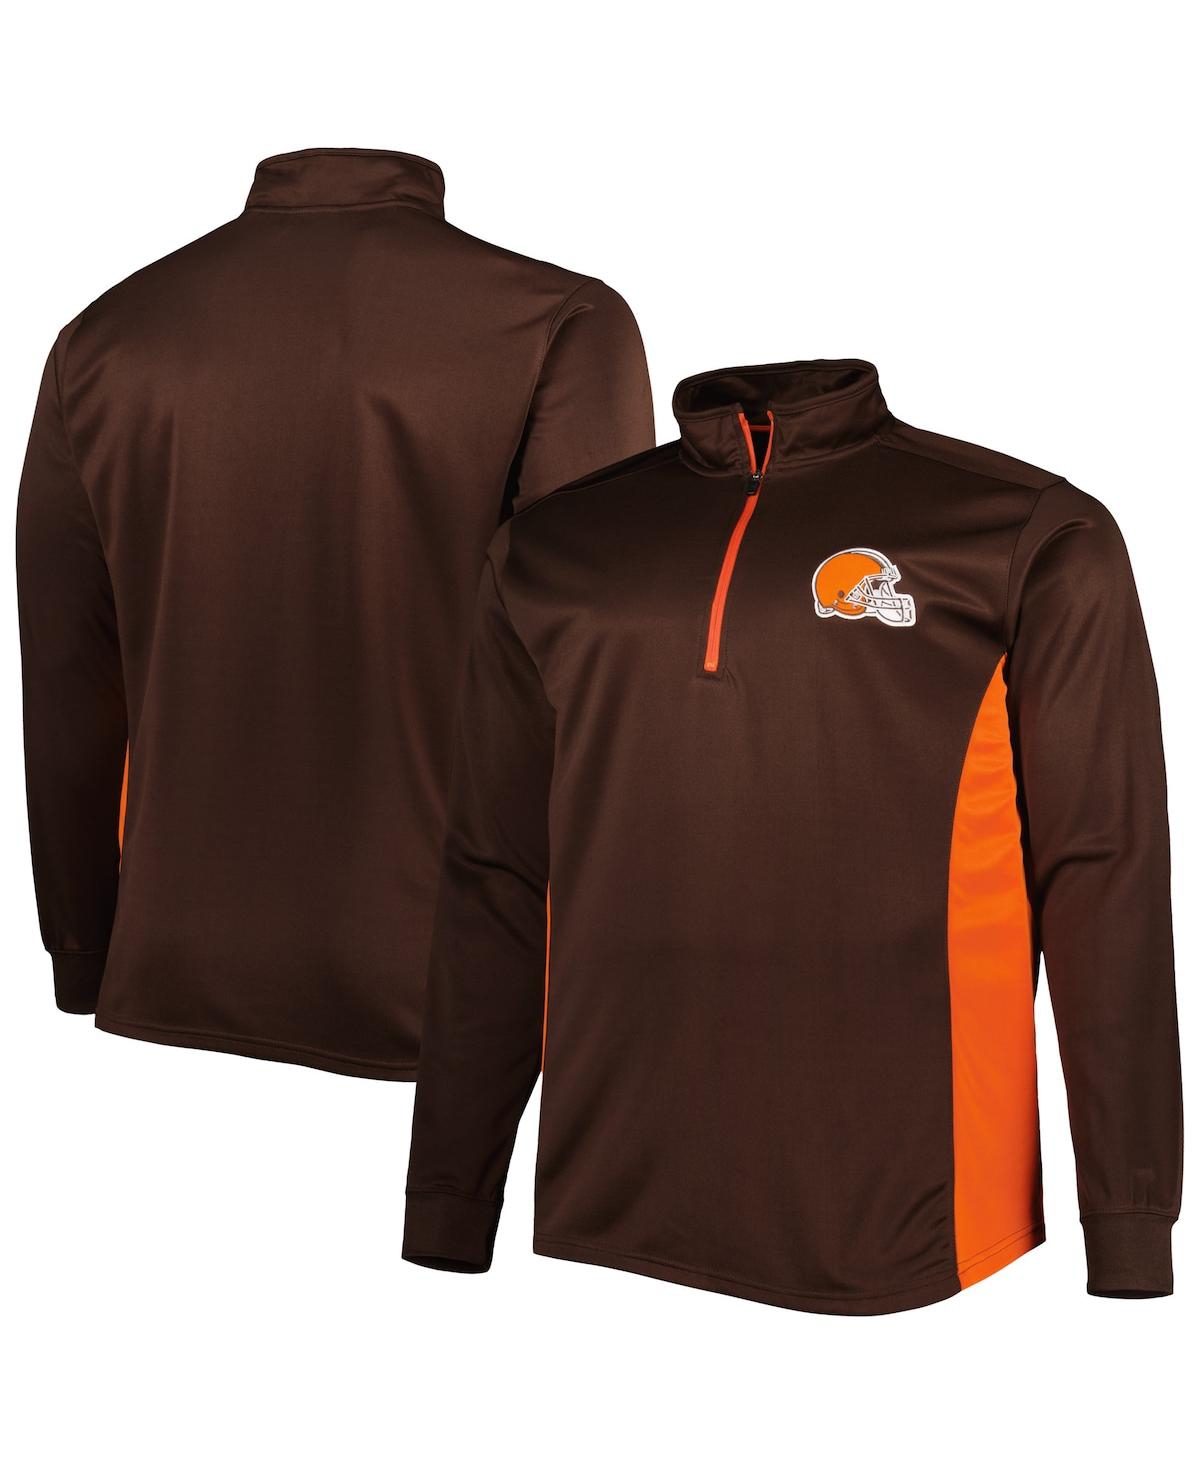 Fanatics Men's Brown Cleveland Browns Big And Tall Quarter-zip Sweatshirt